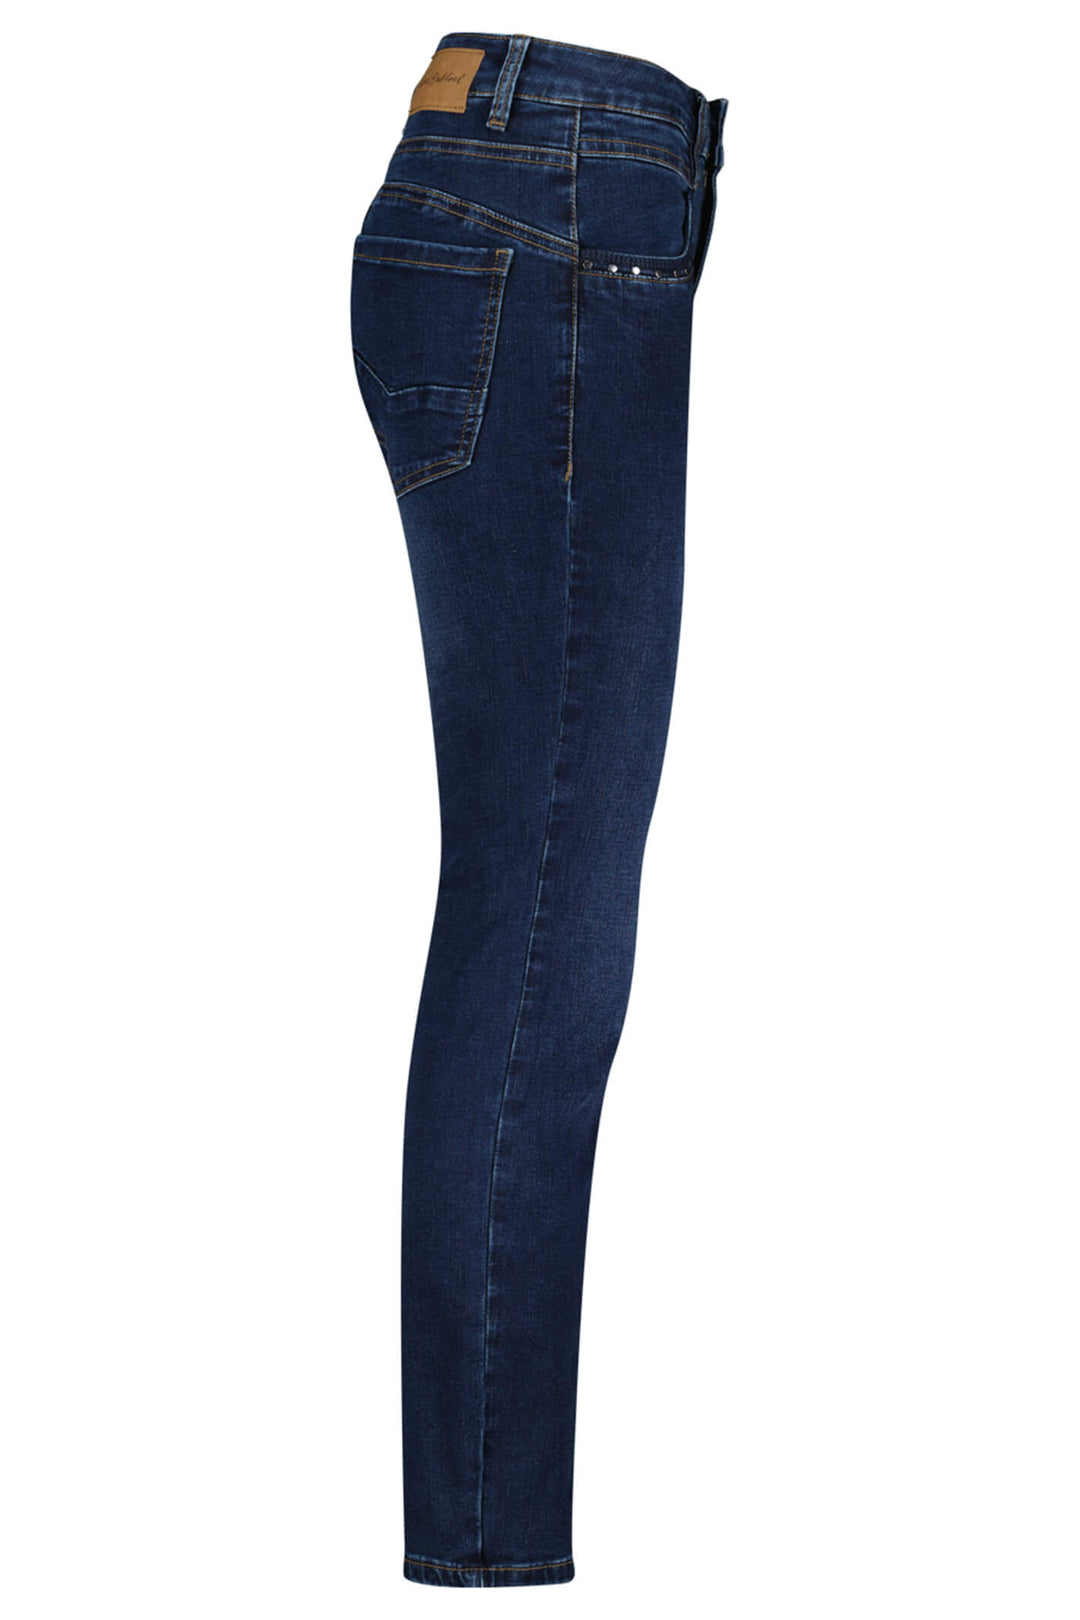 Red Button SRB4064 Sissy Dark Blue Jeans - Olivia Grace Fashion